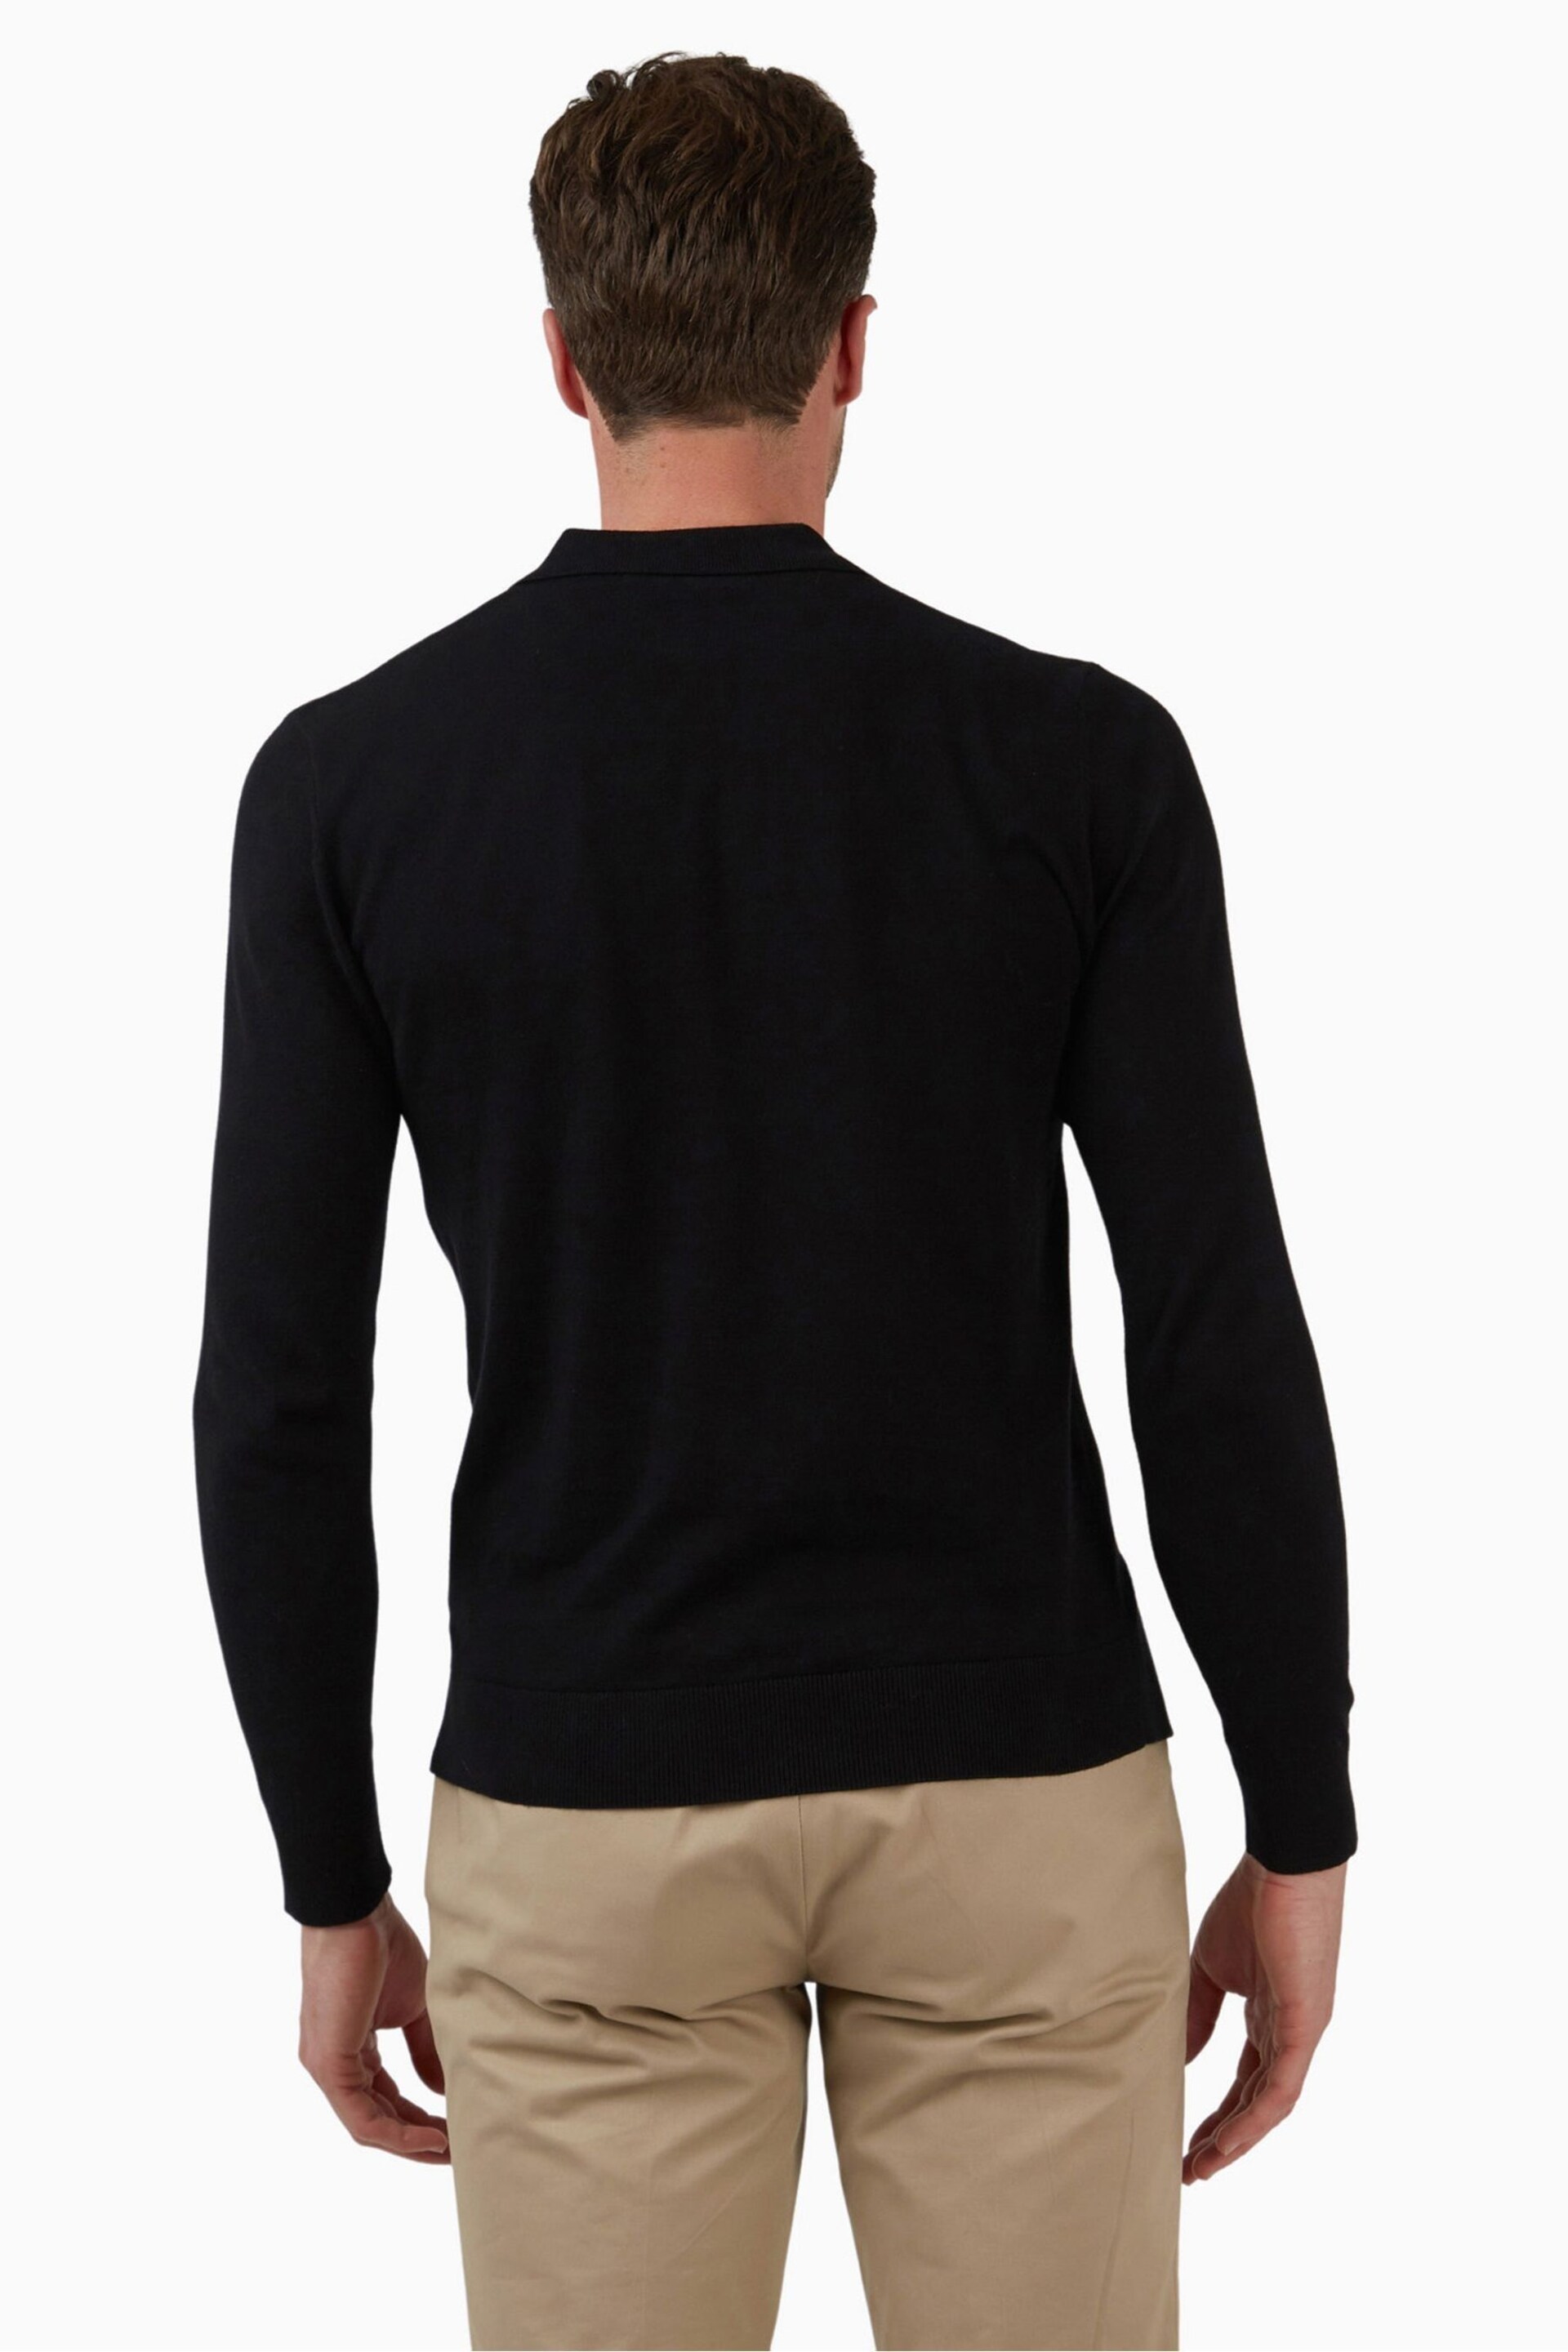 Jeff Banks Black Long Sleeve Knit Polo Shirt - Image 2 of 4